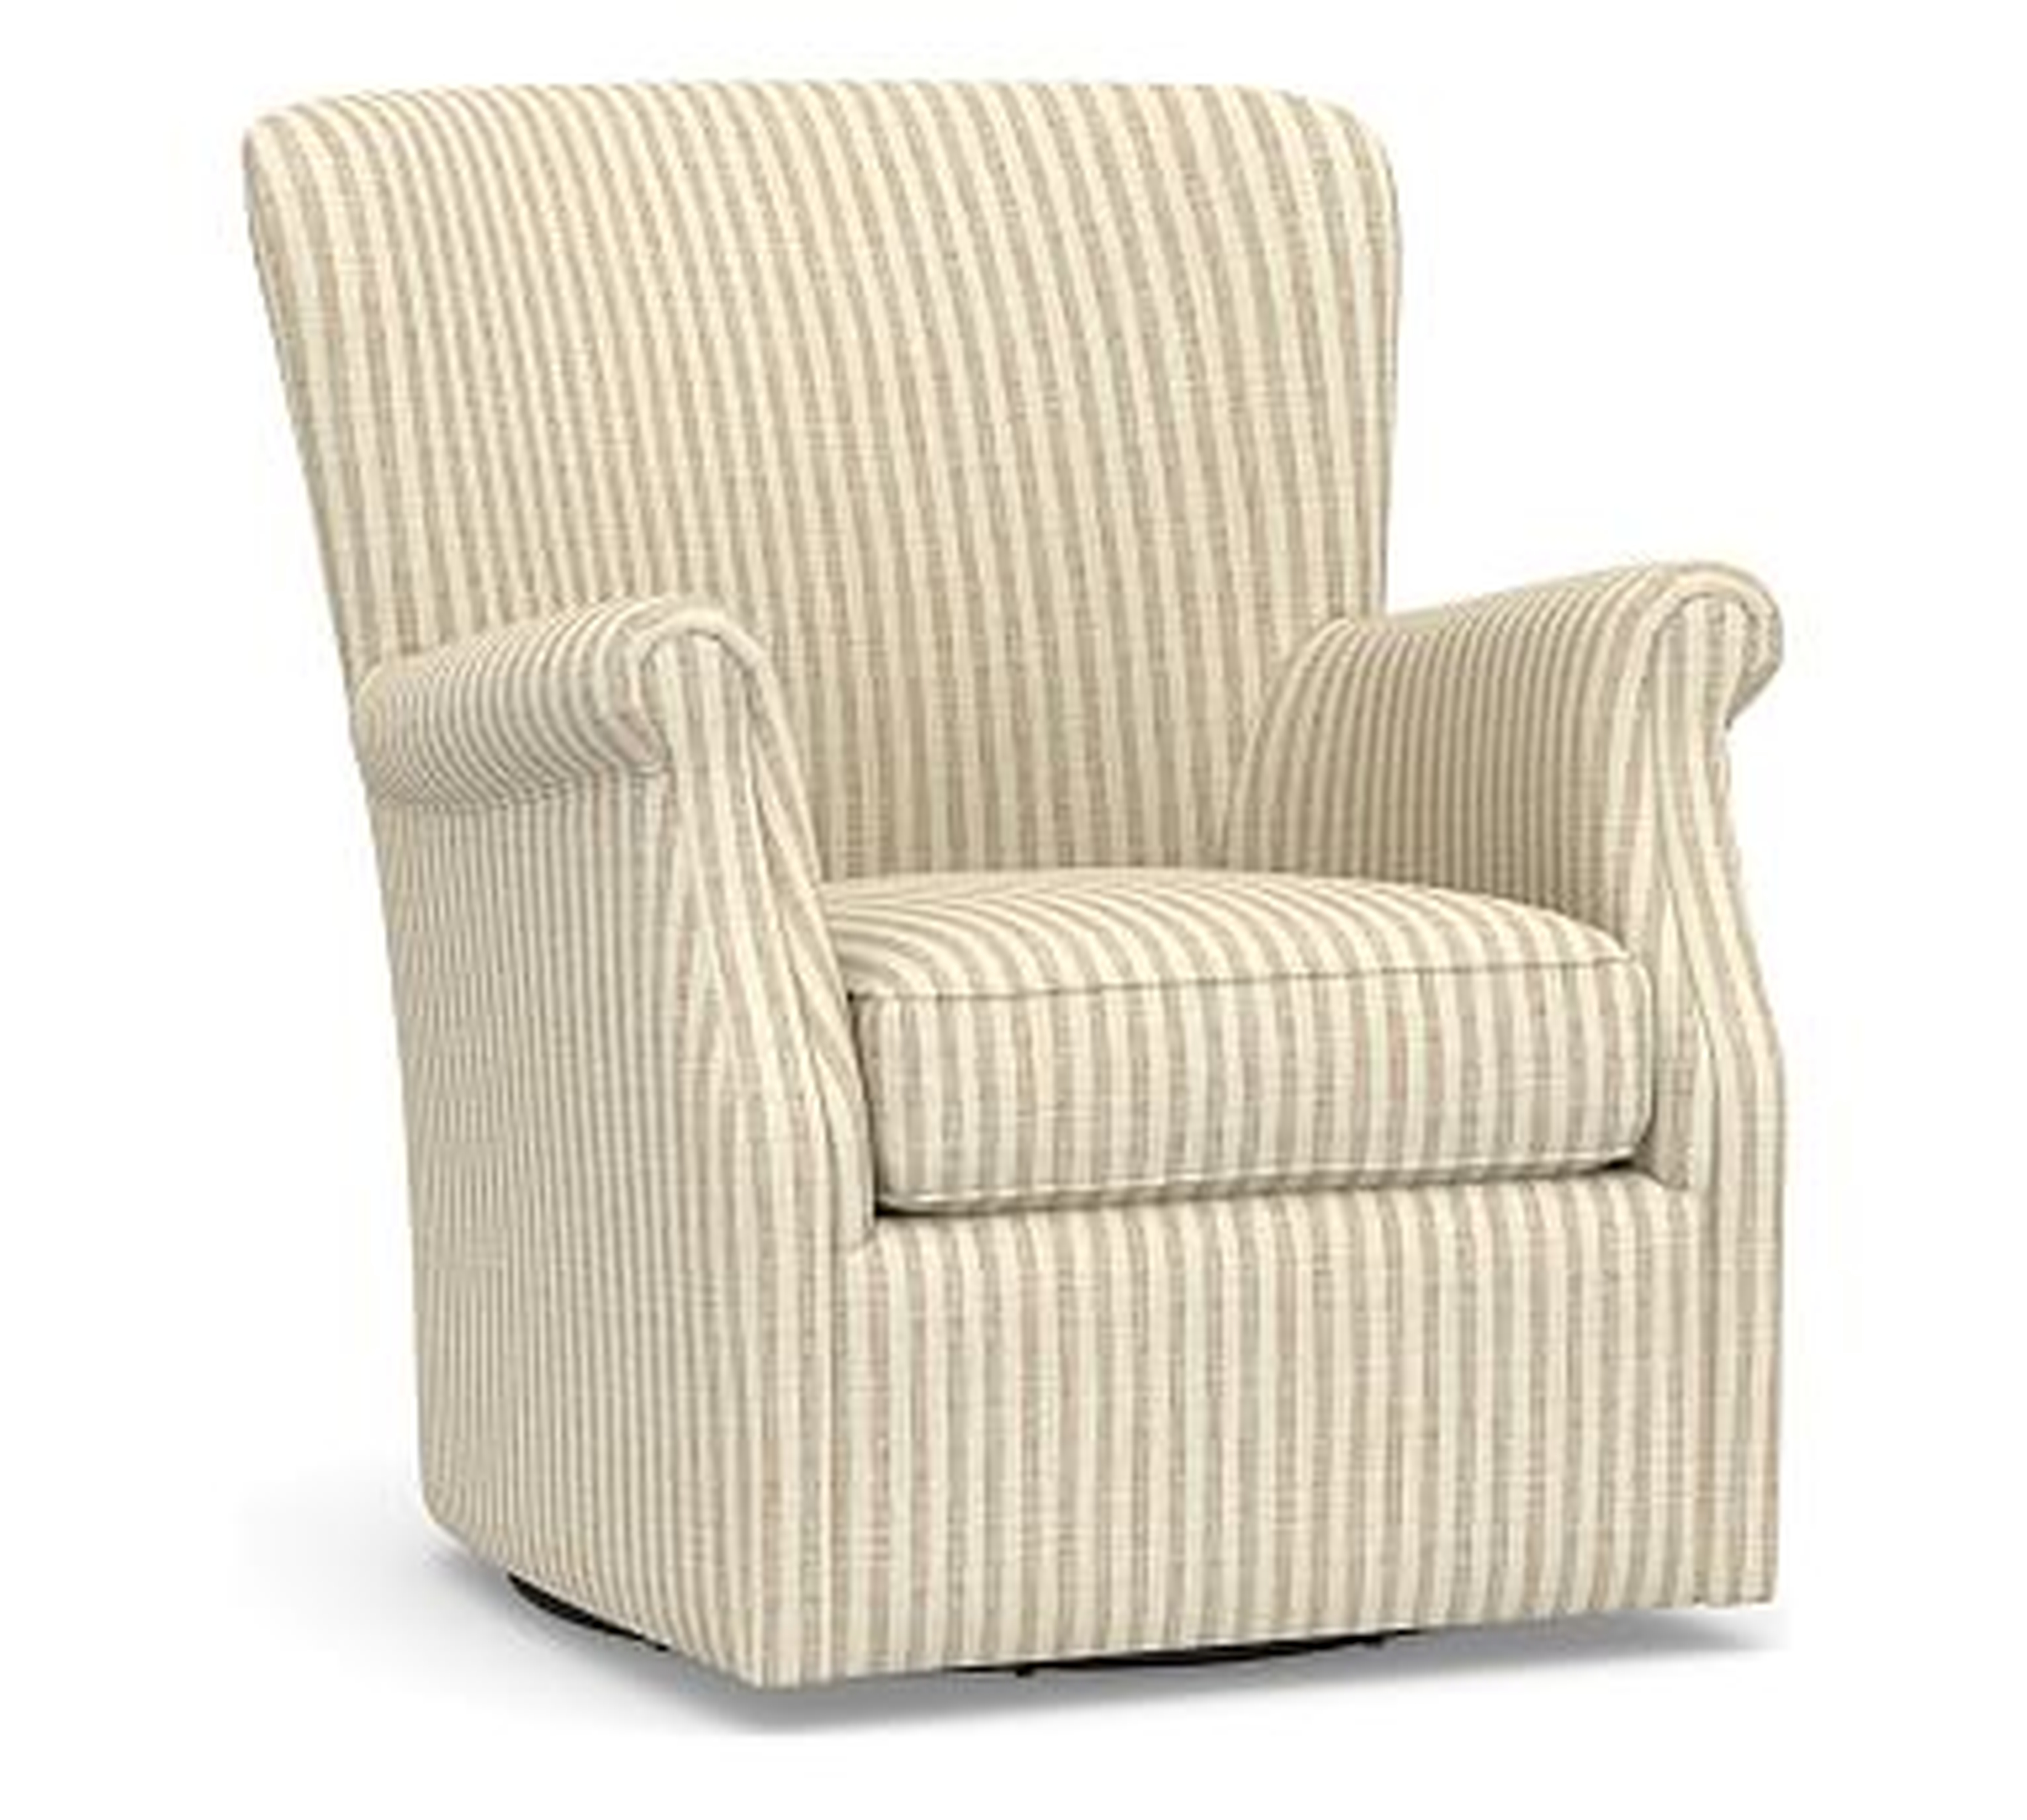 SoMa Minna Upholstered Swivel Armchair, Polyester Wrapped Cushions, Vintage Stripe Khaki/Ivory - Pottery Barn